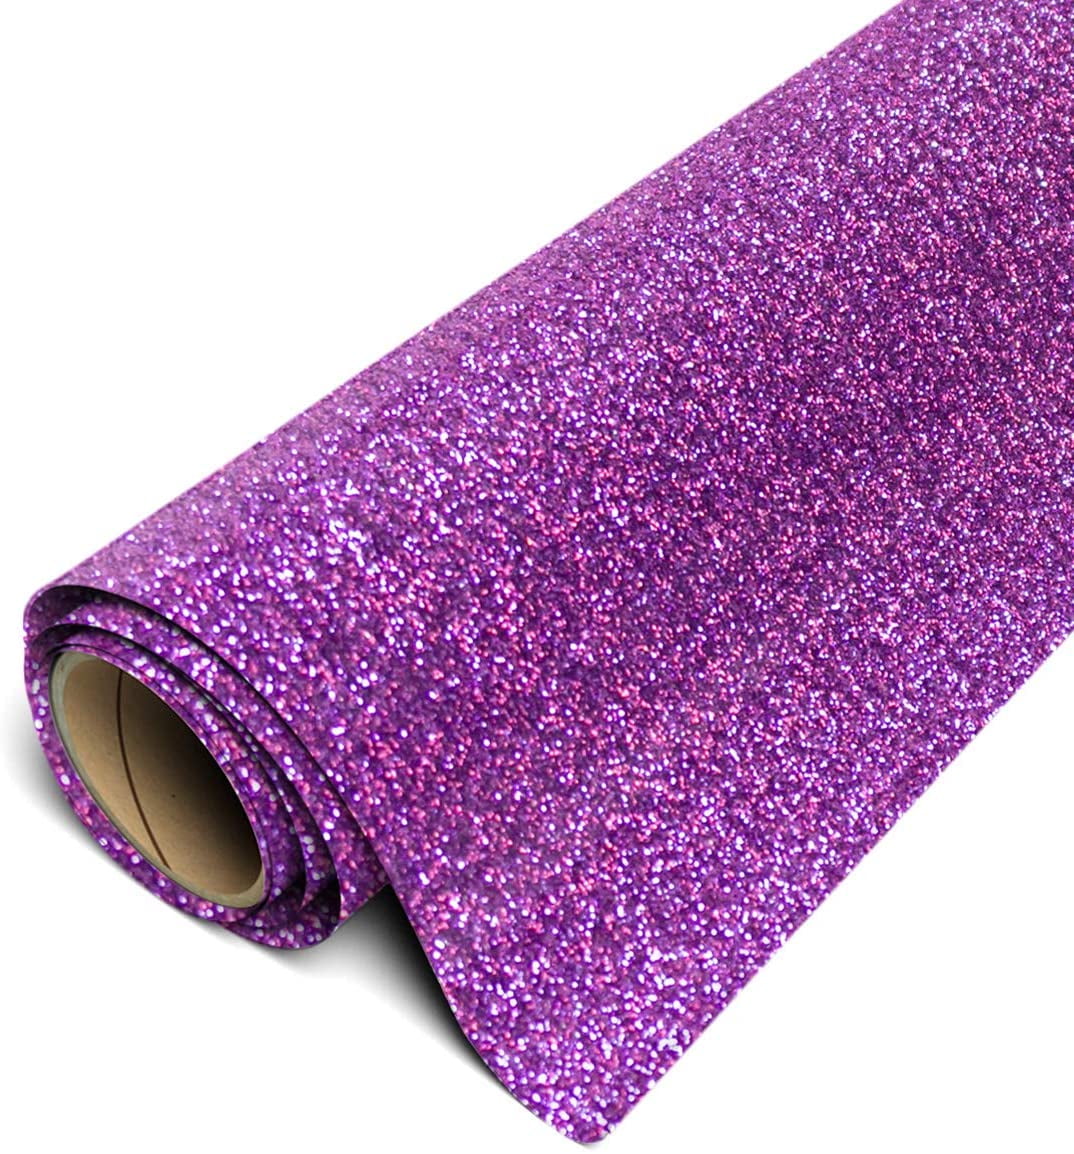 Siser Glitter 12 x 5 Yard Roll - Neon Purple